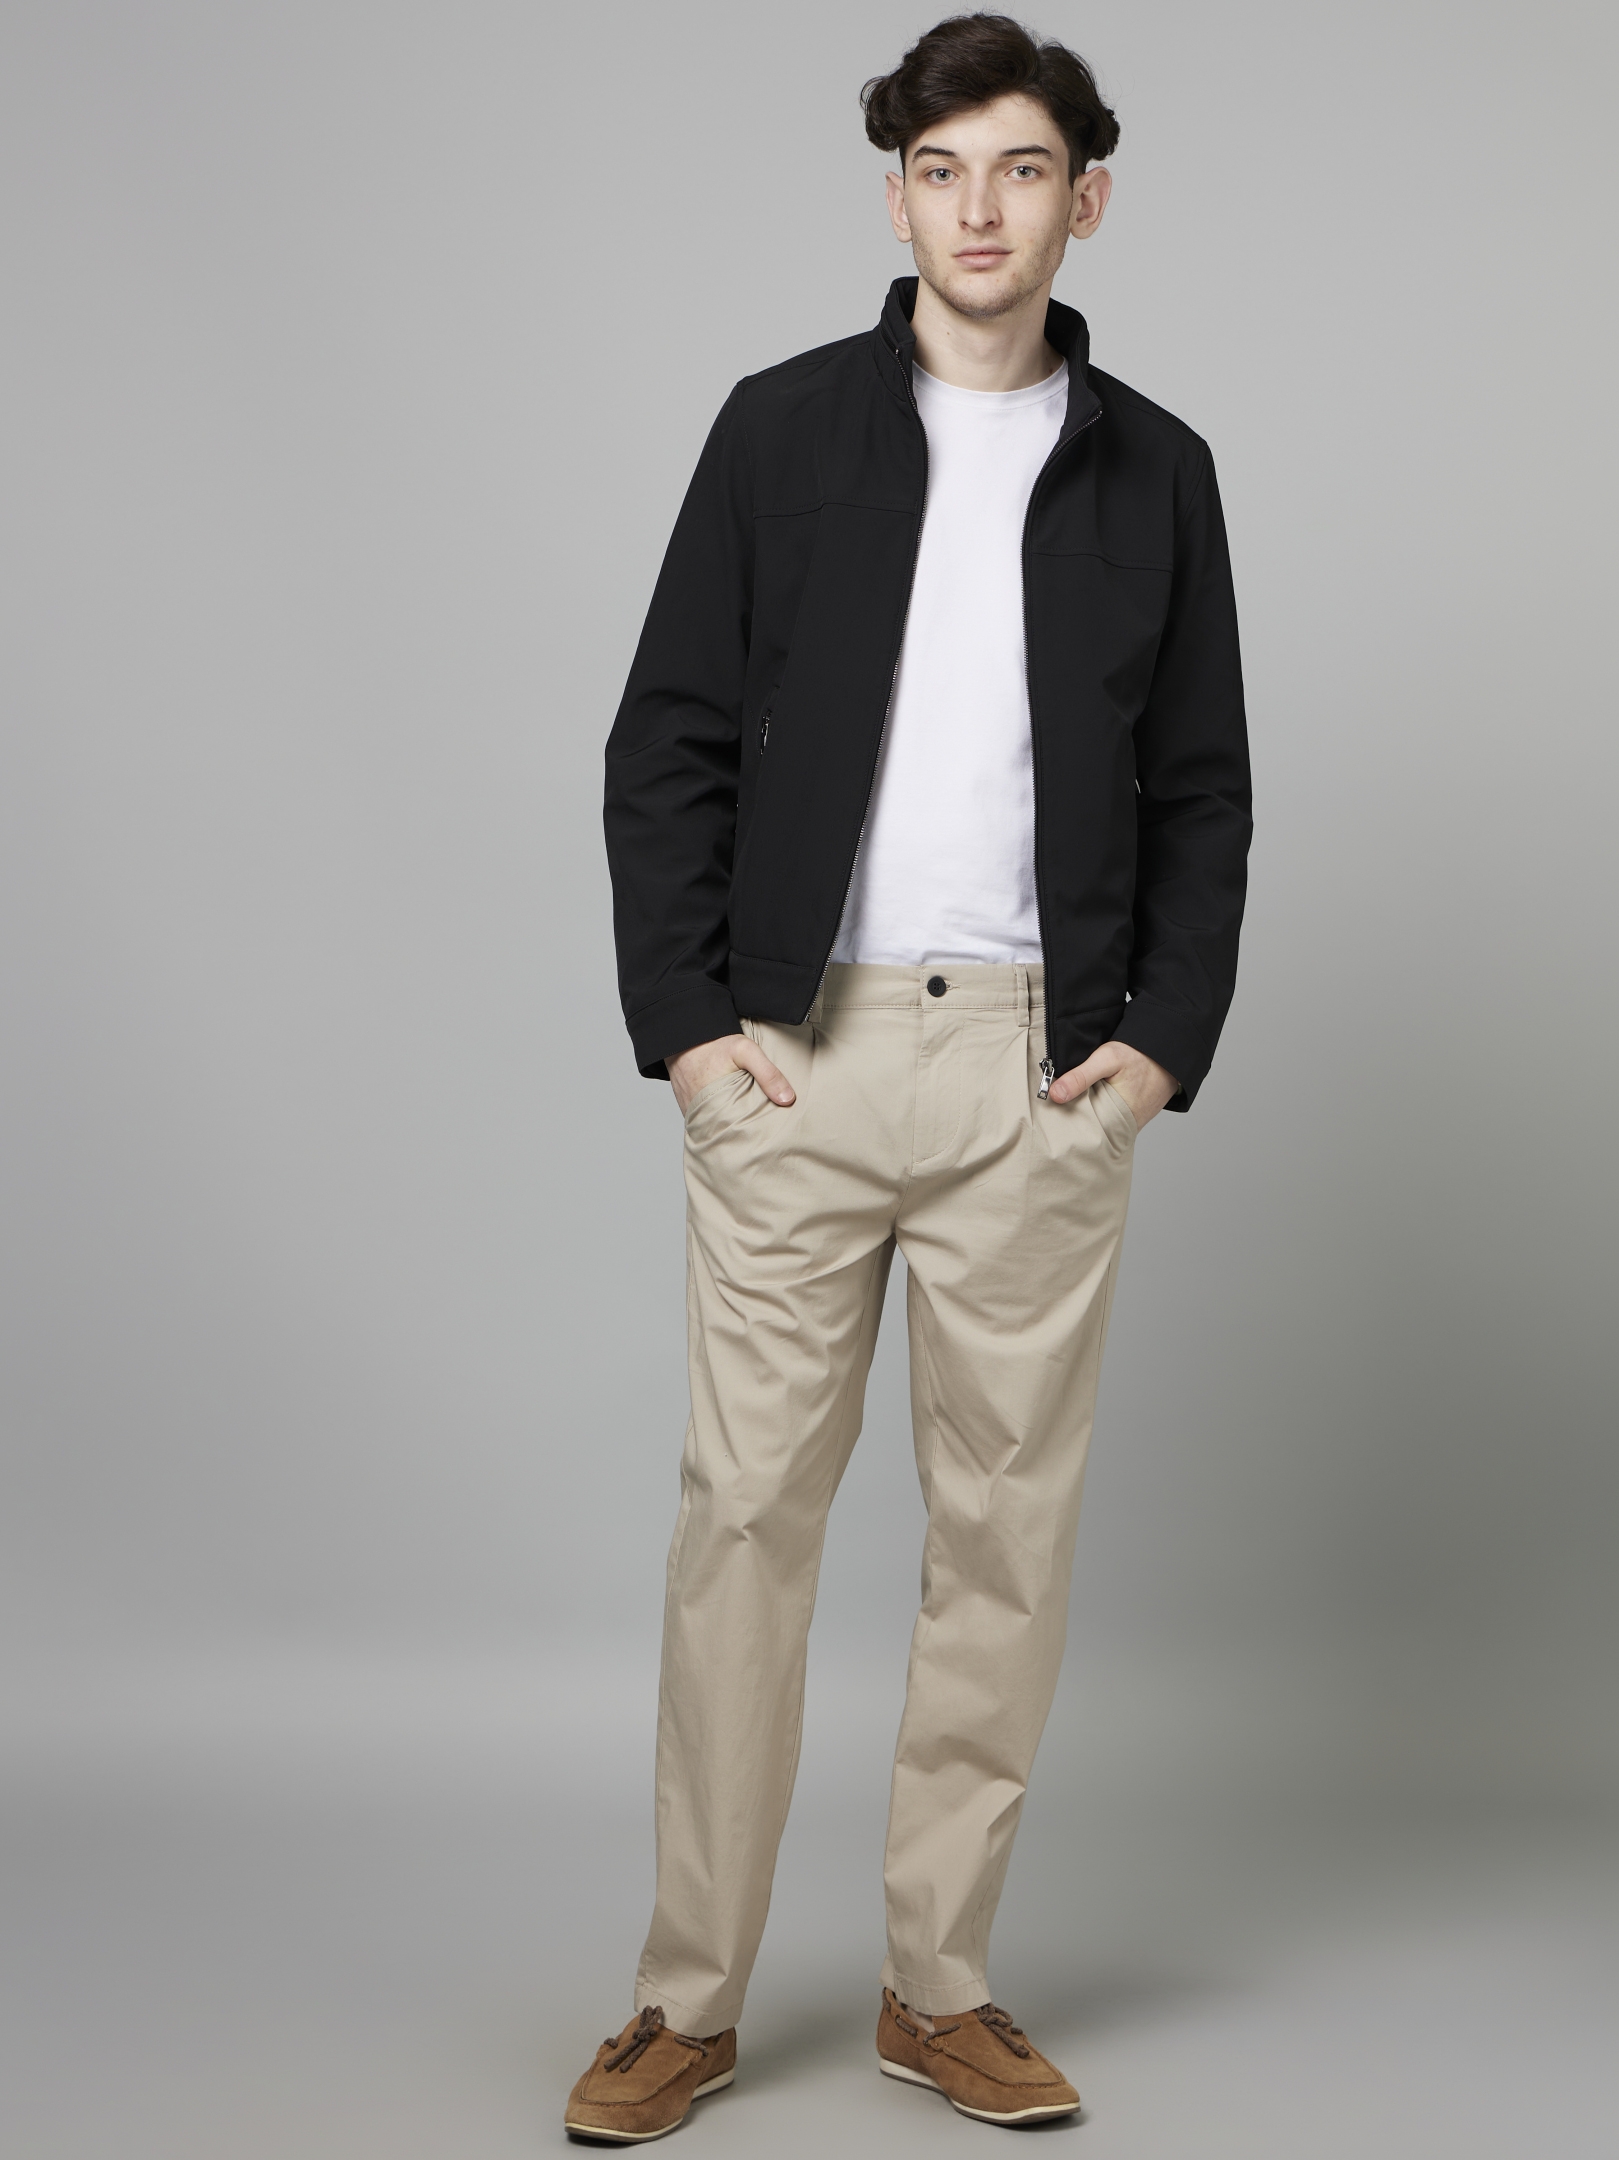 Men's Brown Cotton Blend Solid Trousers